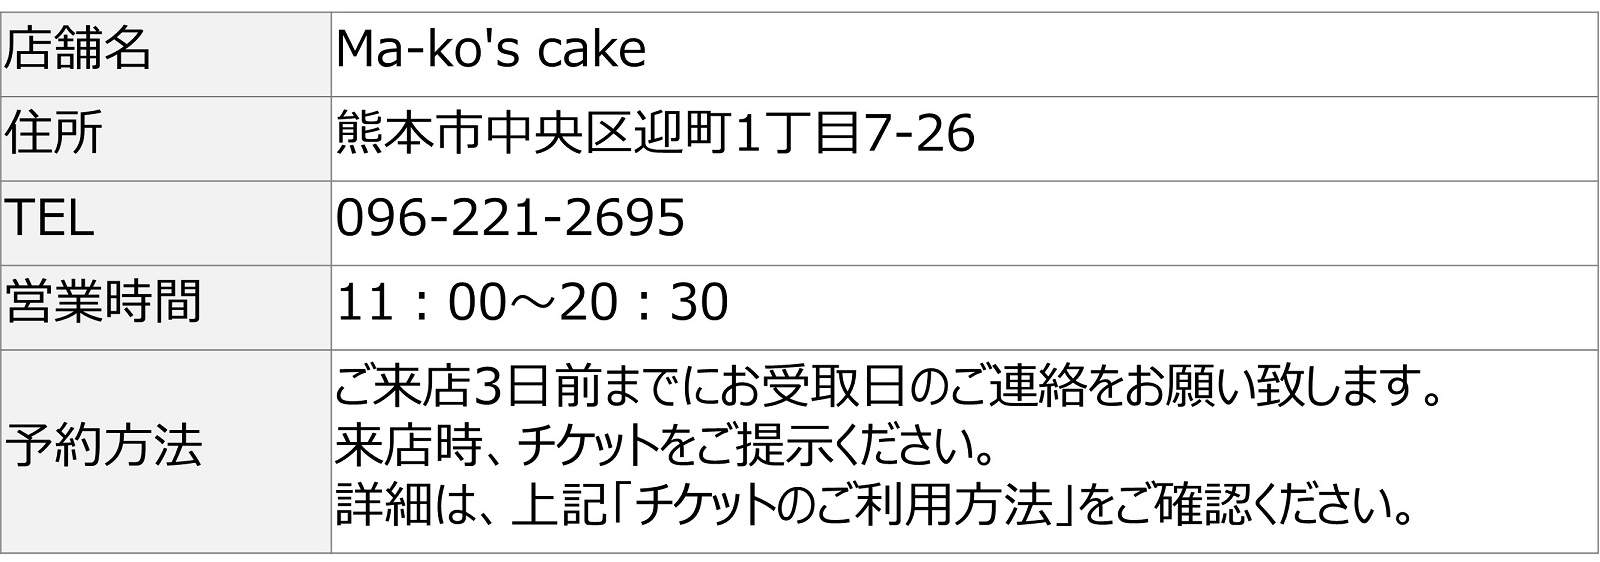 /data/ec/438/store_ma-ko's cake.jpg